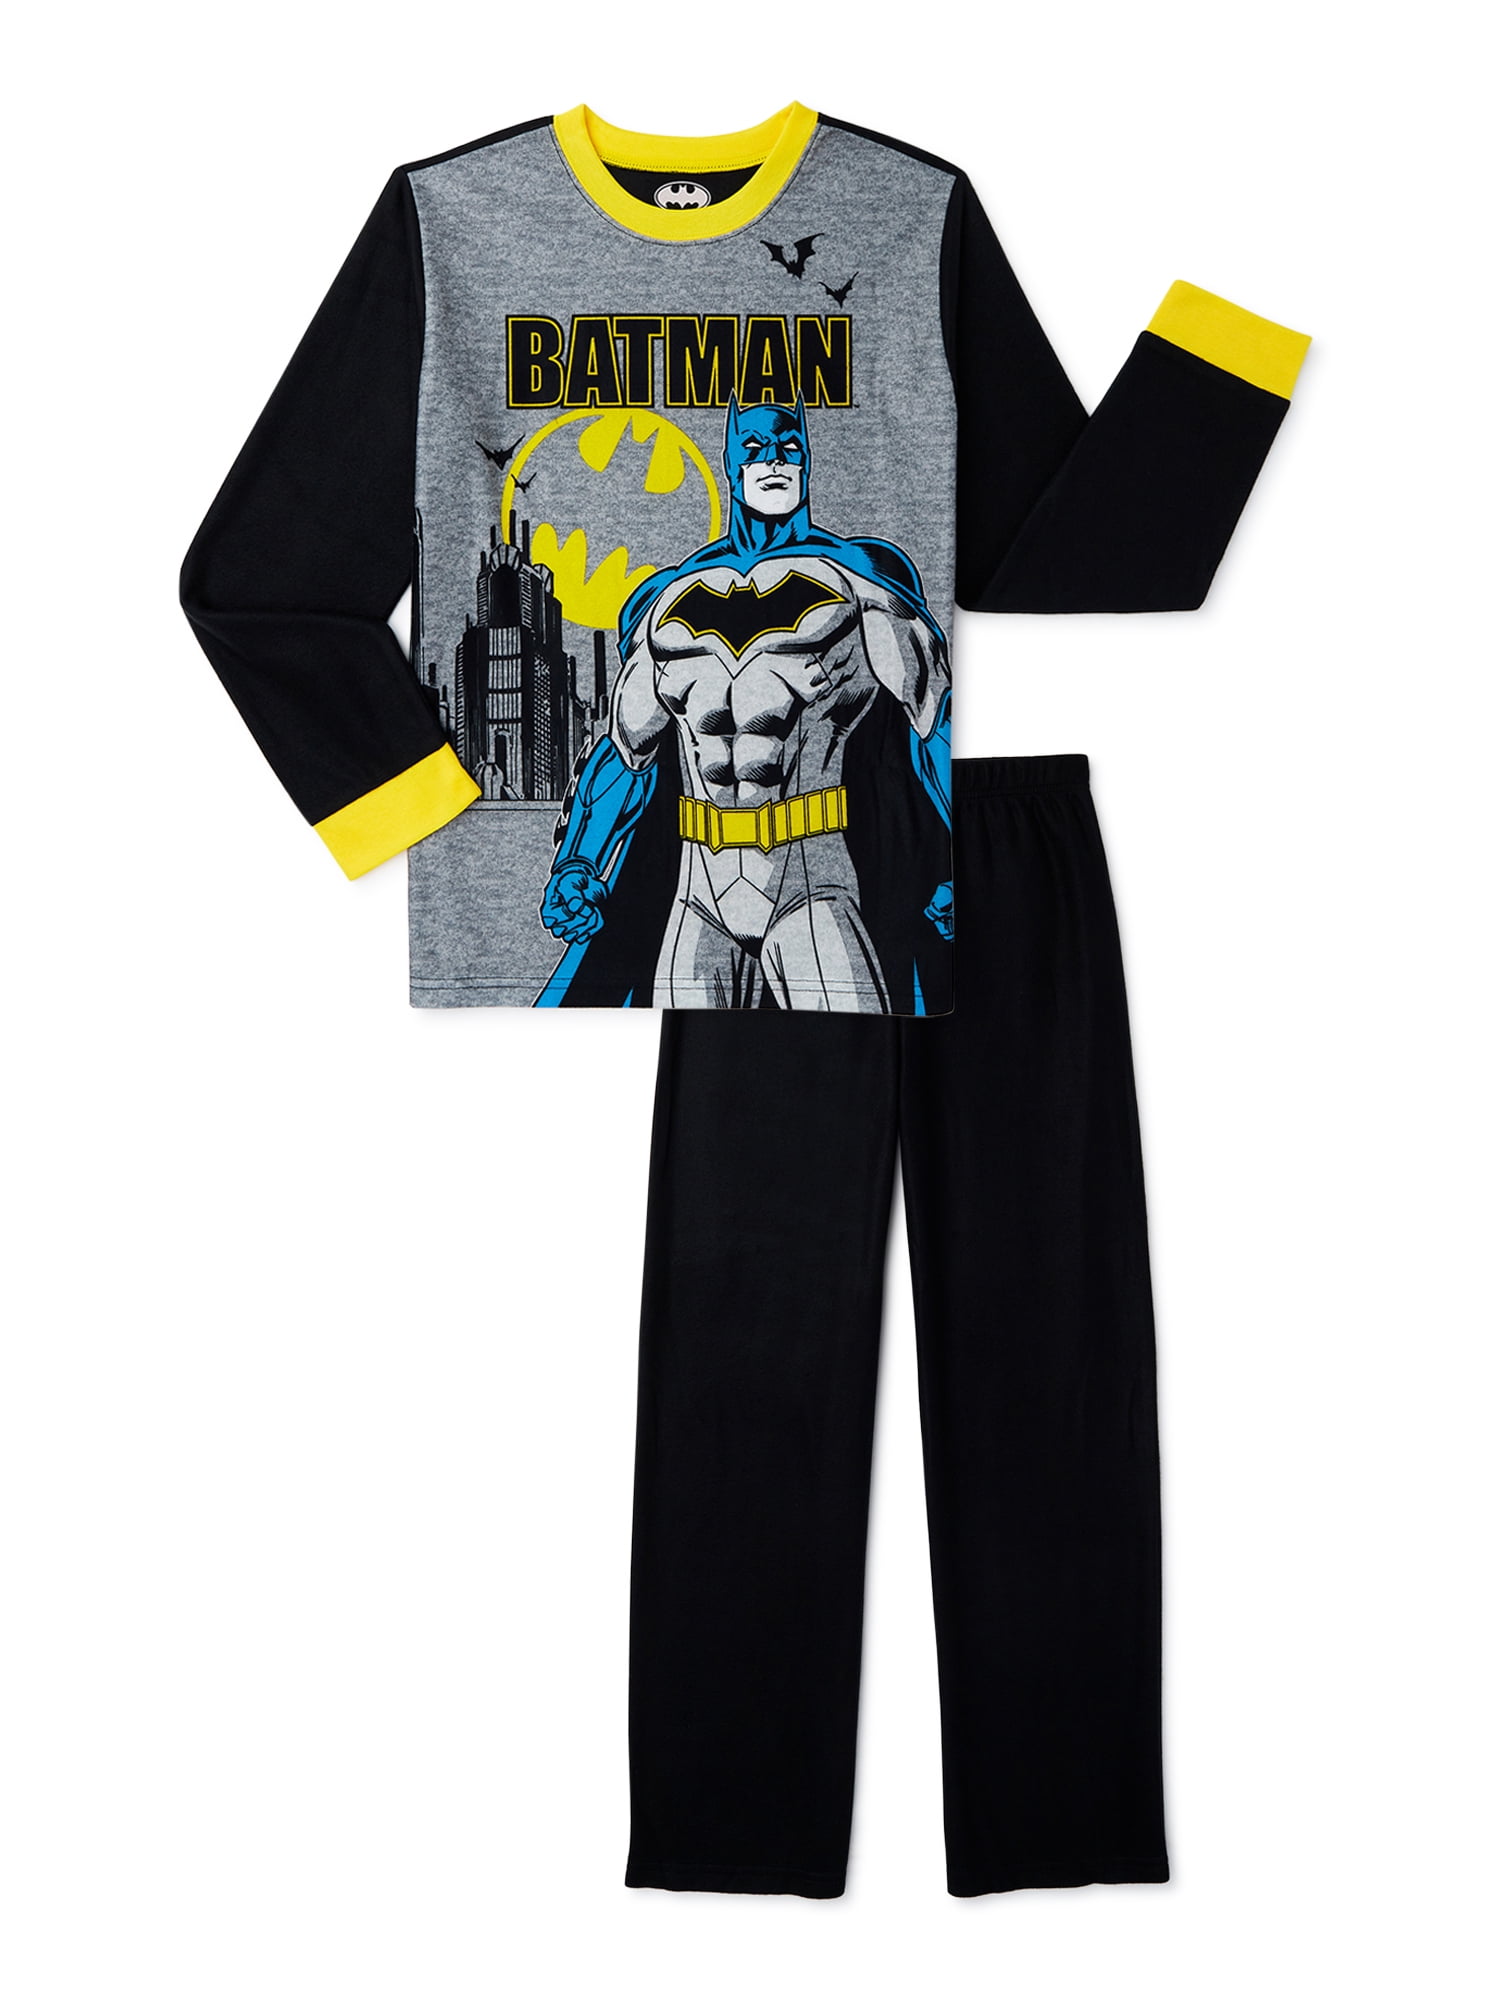 Batman BoysThermal Underwear Size 8 Set 2 piece Glow in the Dark Pajamas 